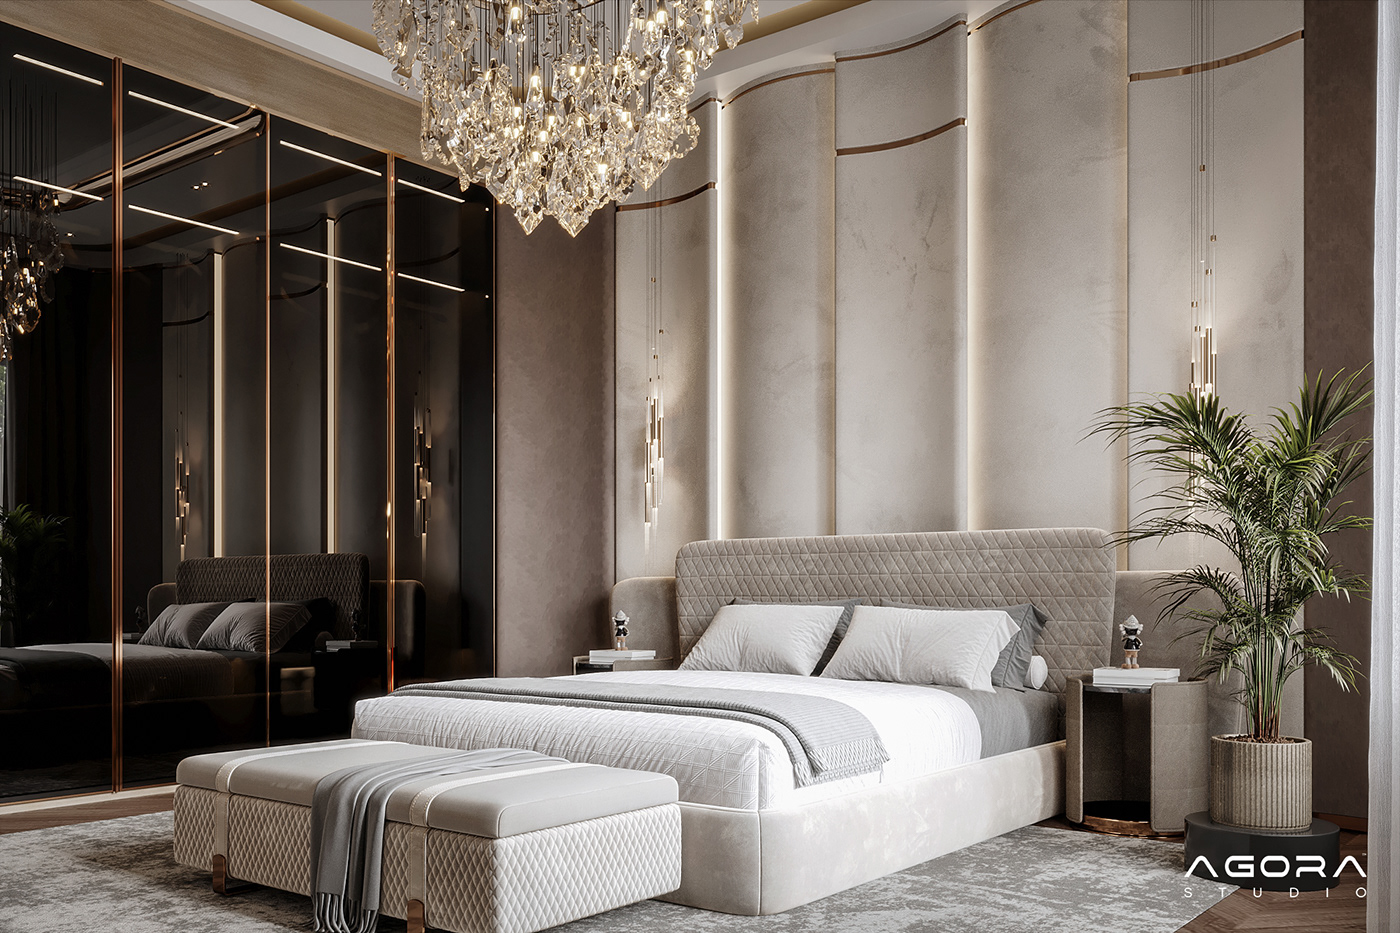 Interior Render visualization vray SketchUP archviz corona luxury bedroom 3ds max